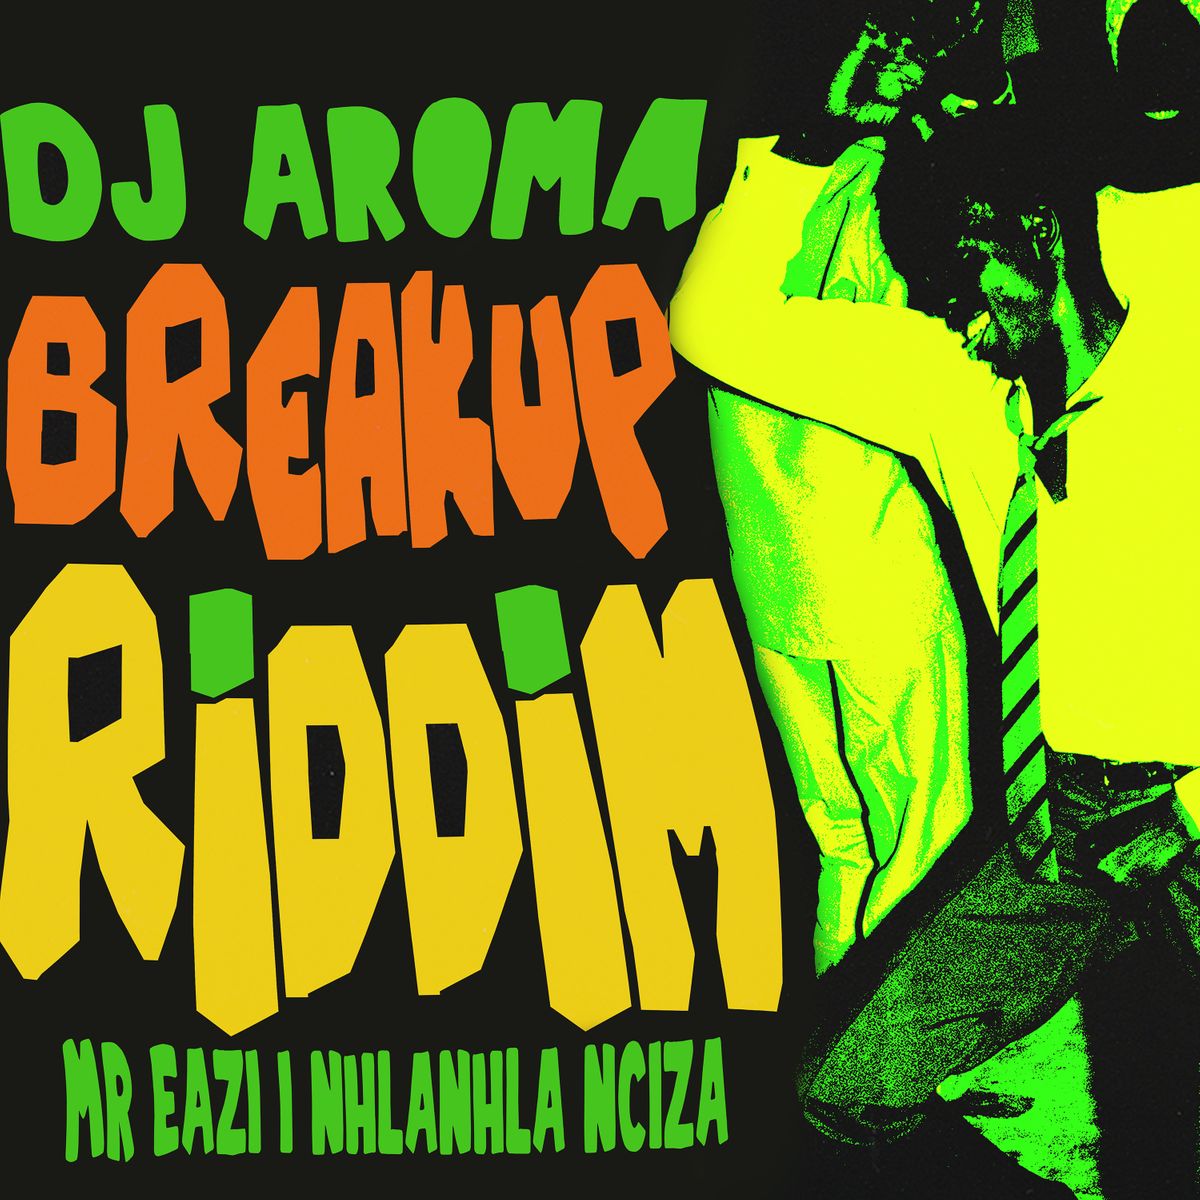 DJ Aroma, Mr Eazi & Nhlanhla Nciza - Breakup Riddim